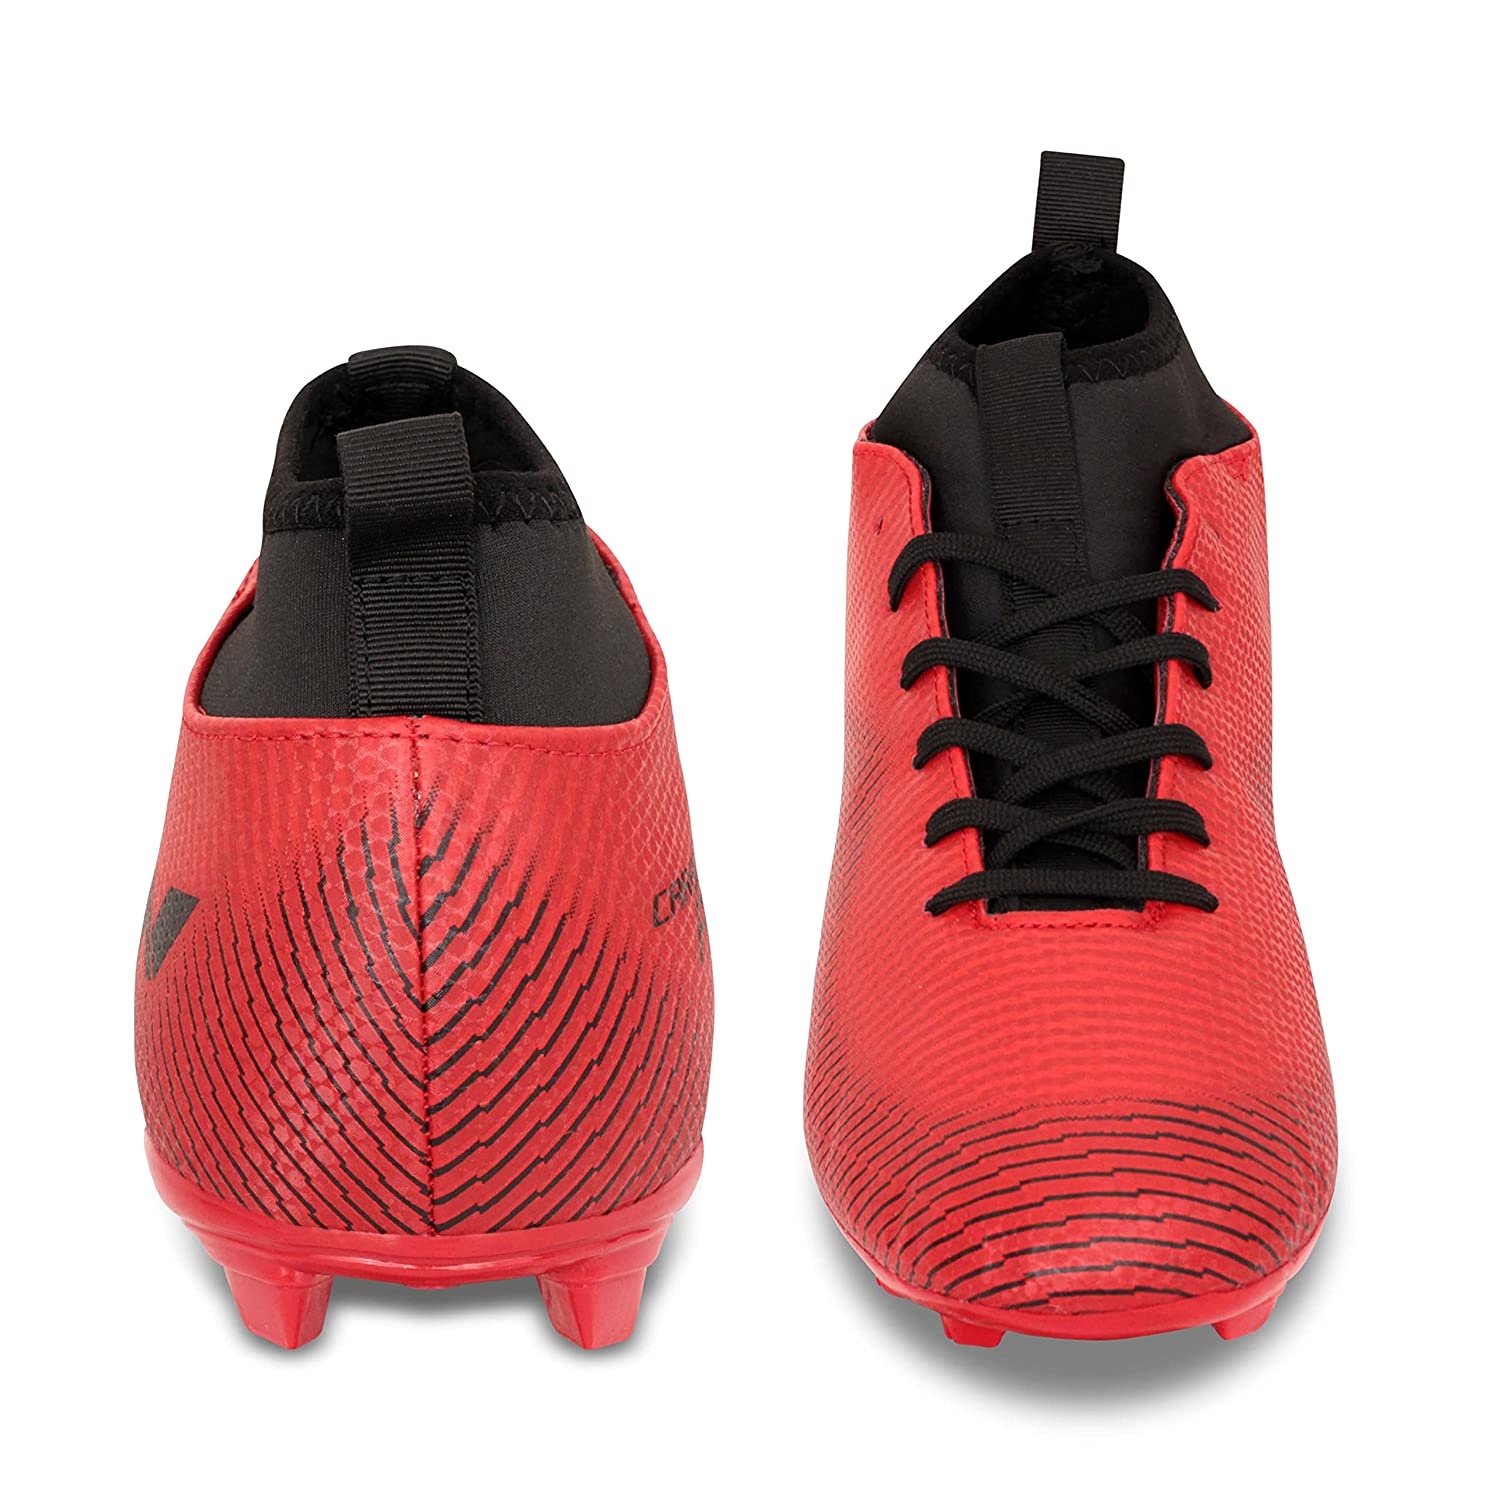 Nivia CarbonitePro 4.0 Football Shoes For Men - Best Price online Prokicksports.com